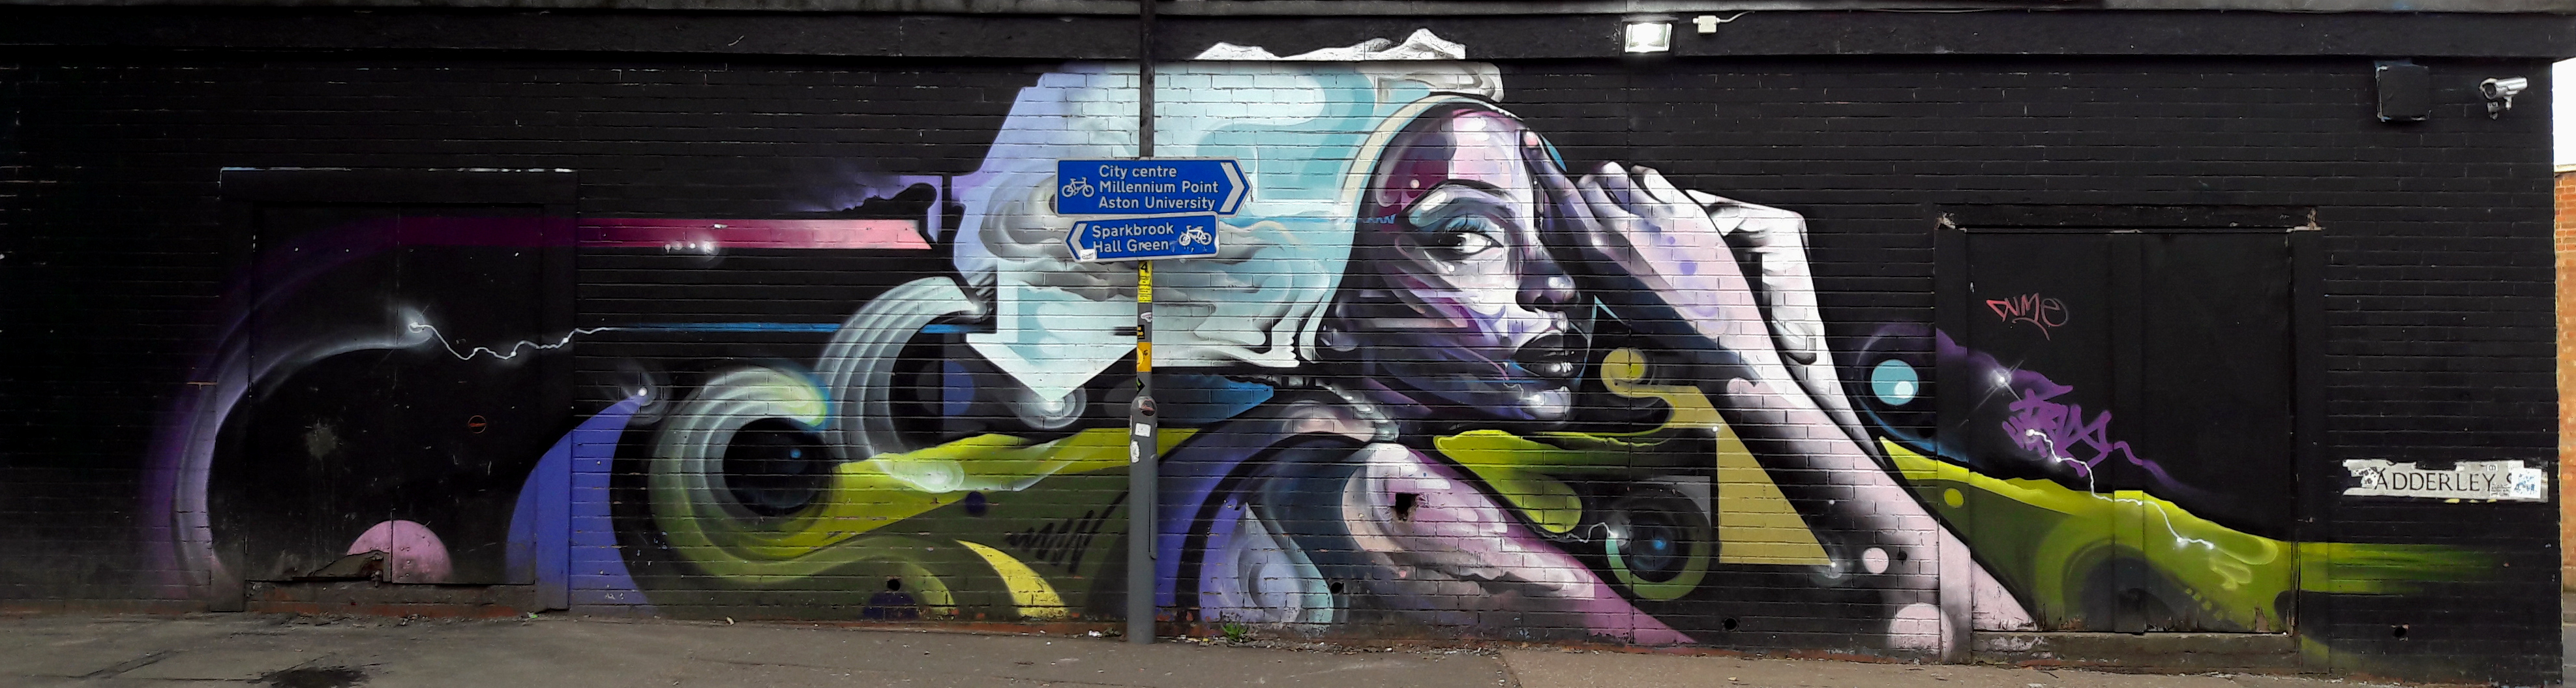 Graffiti 6547  de Mr CENZ capturé par Mephisroth à birmingham United Kingdom